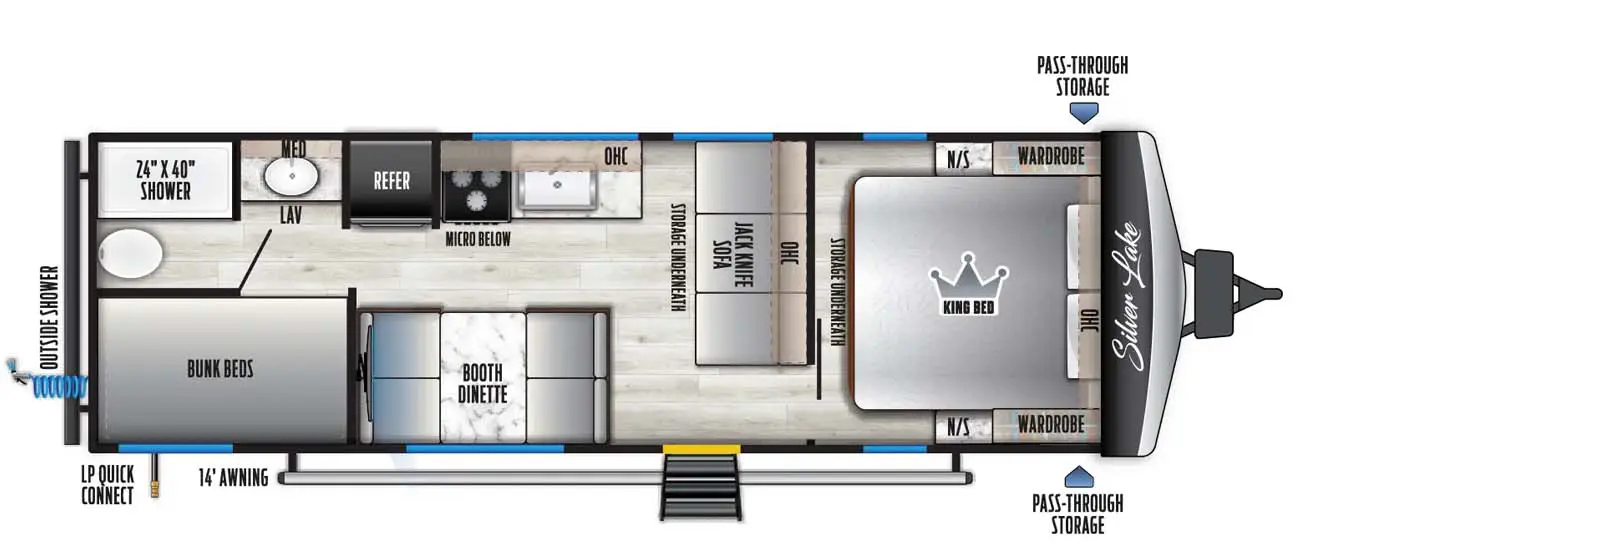 2400BH Floorplan Image